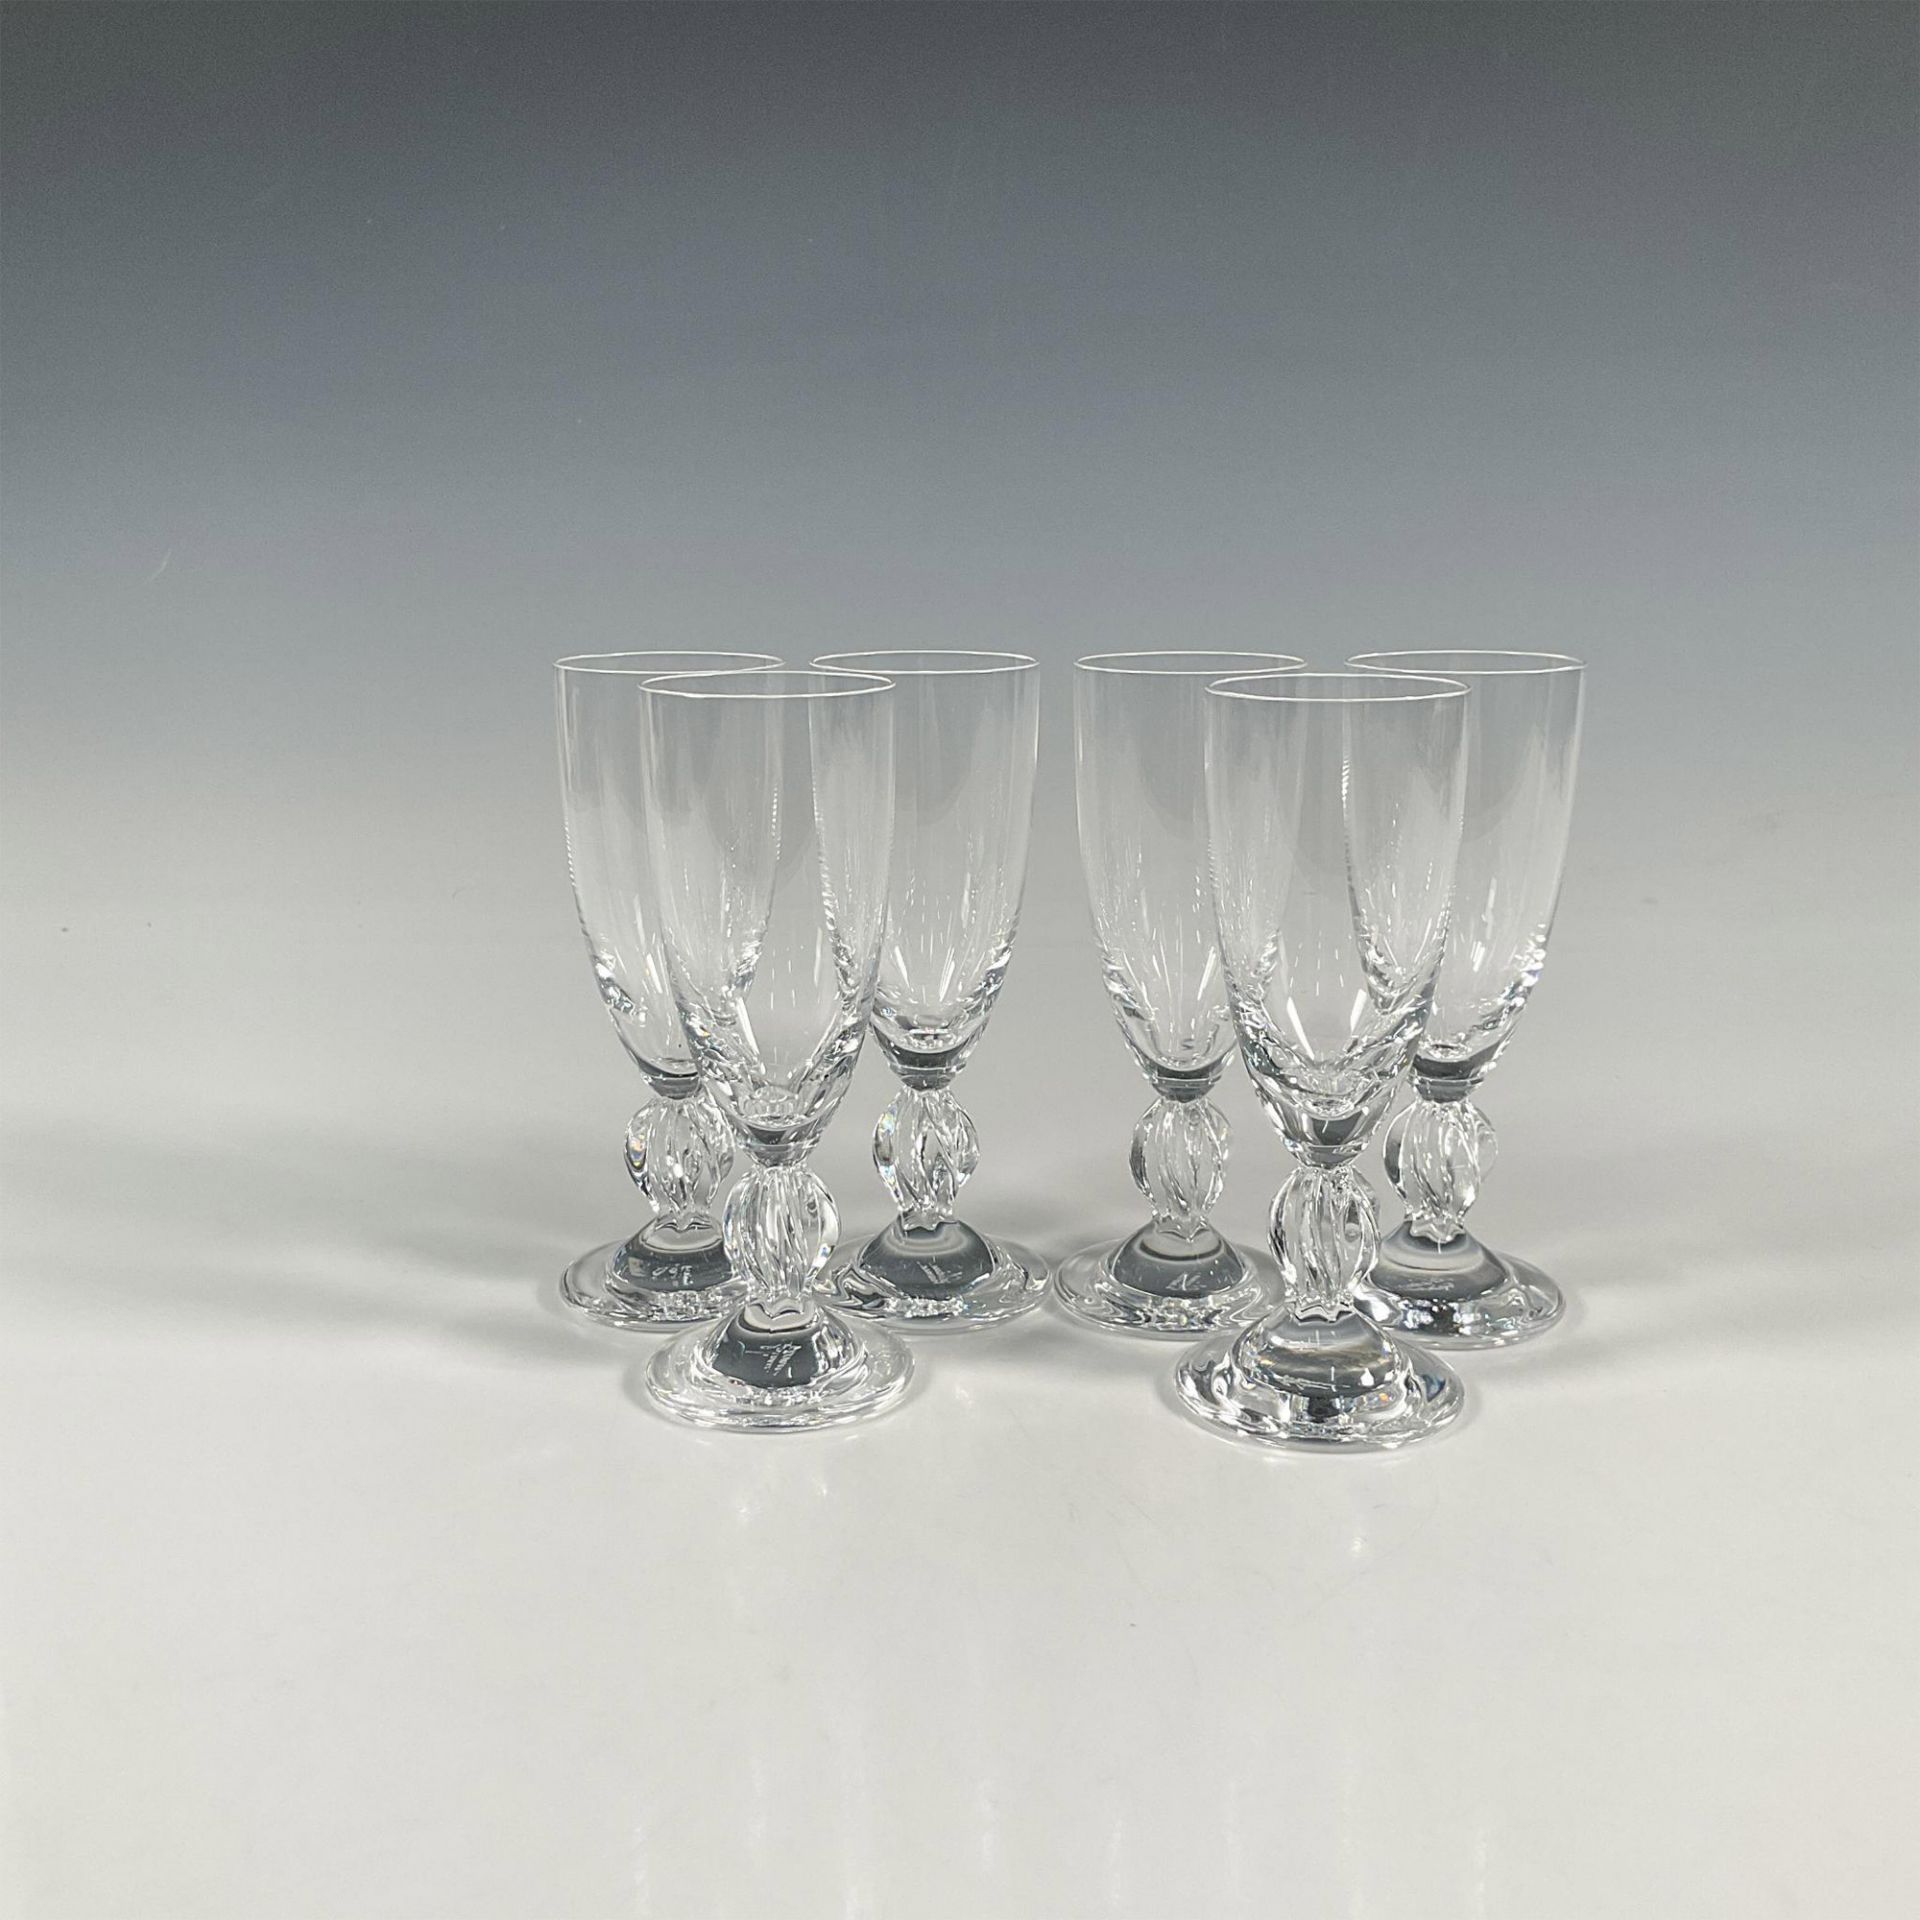 6pc Lalique Crystal Sherry Glasses, Frejus - Image 2 of 4